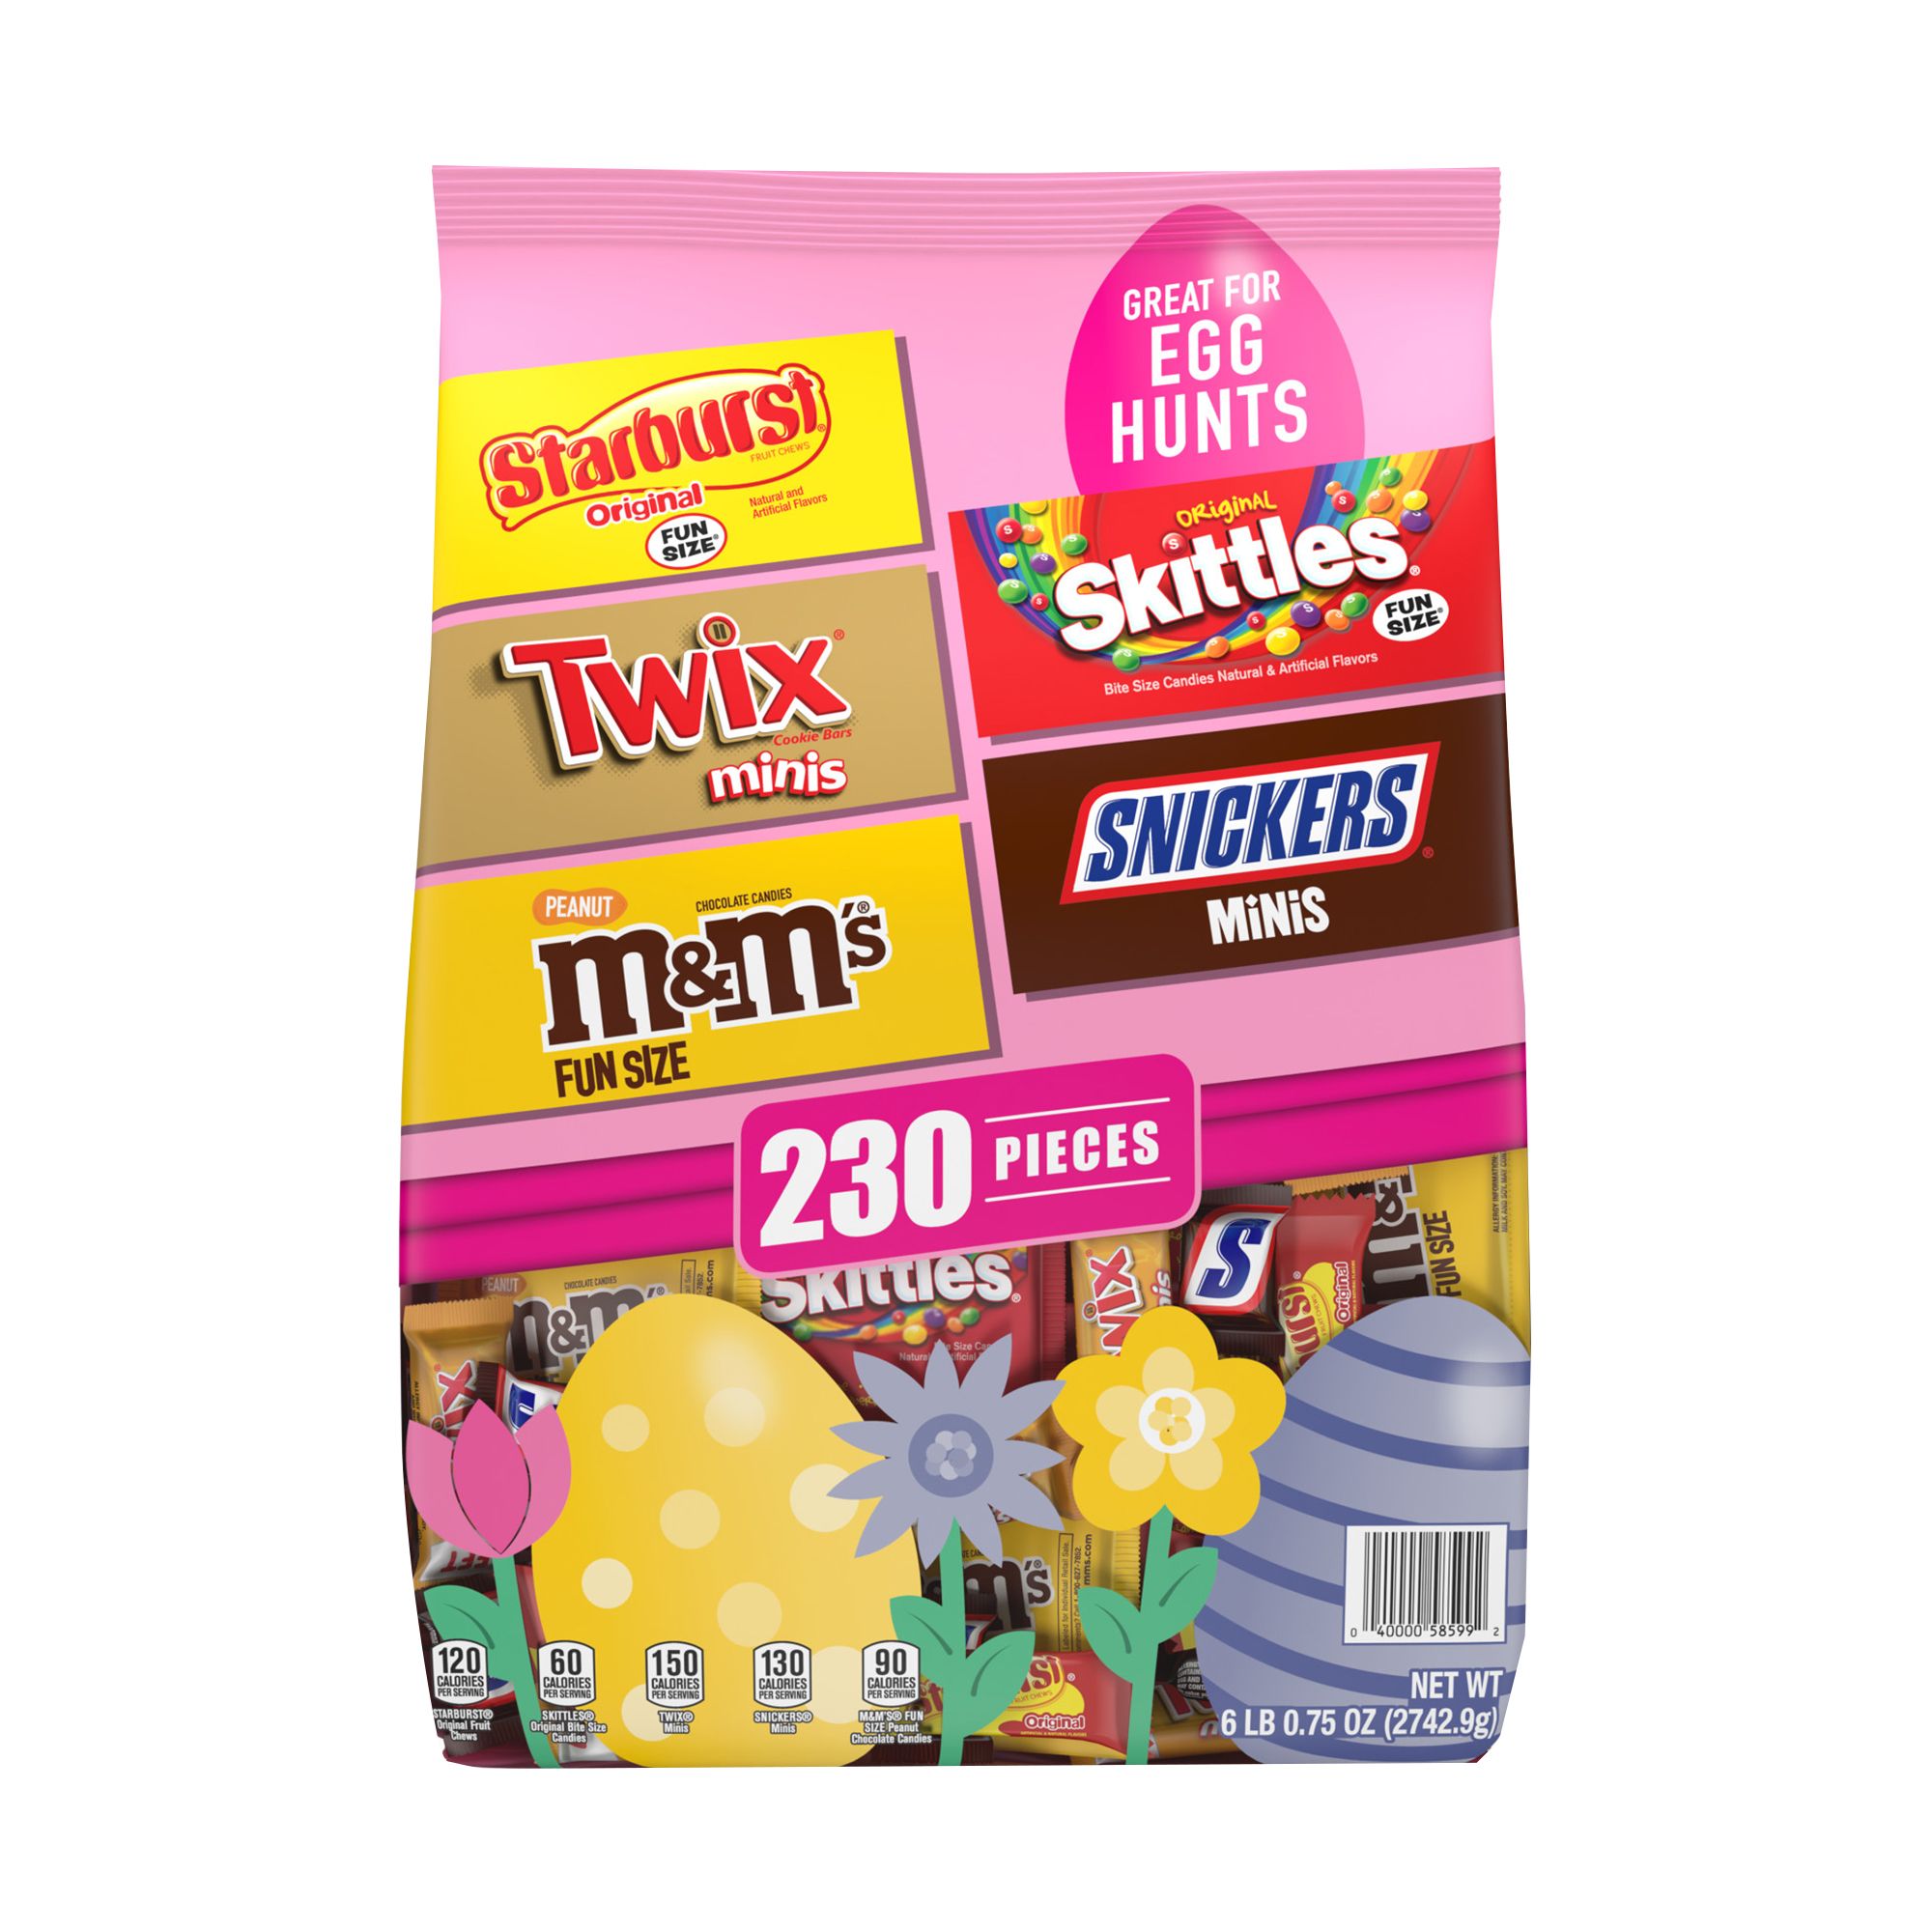 M&M's M&M'S Peanut Milk Chocolate Pastel Easter Candy Assortment